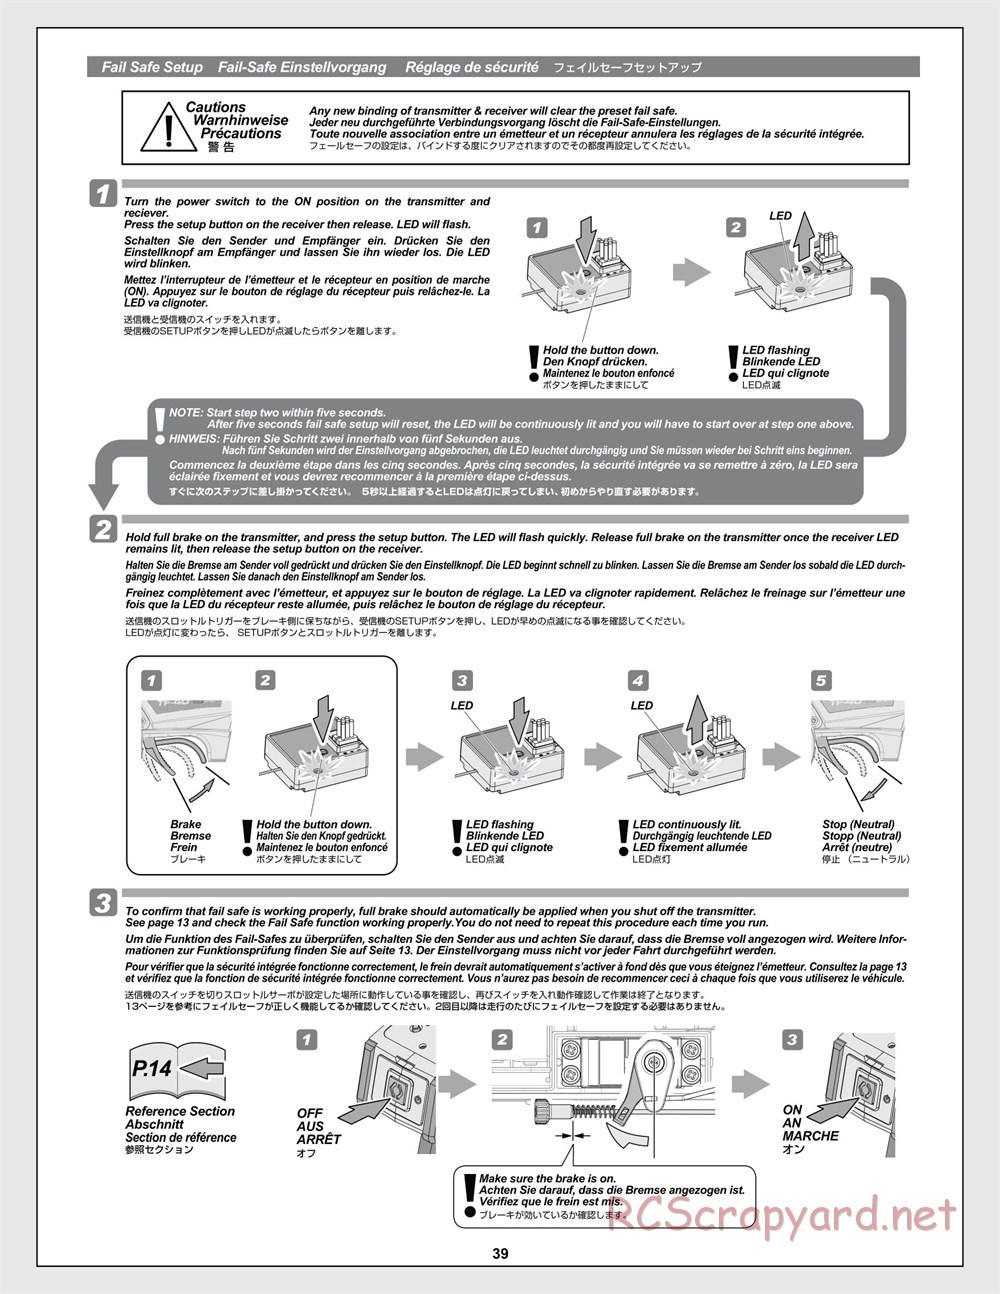 HPI - Savage XL 5.9 - Manual - Page 39